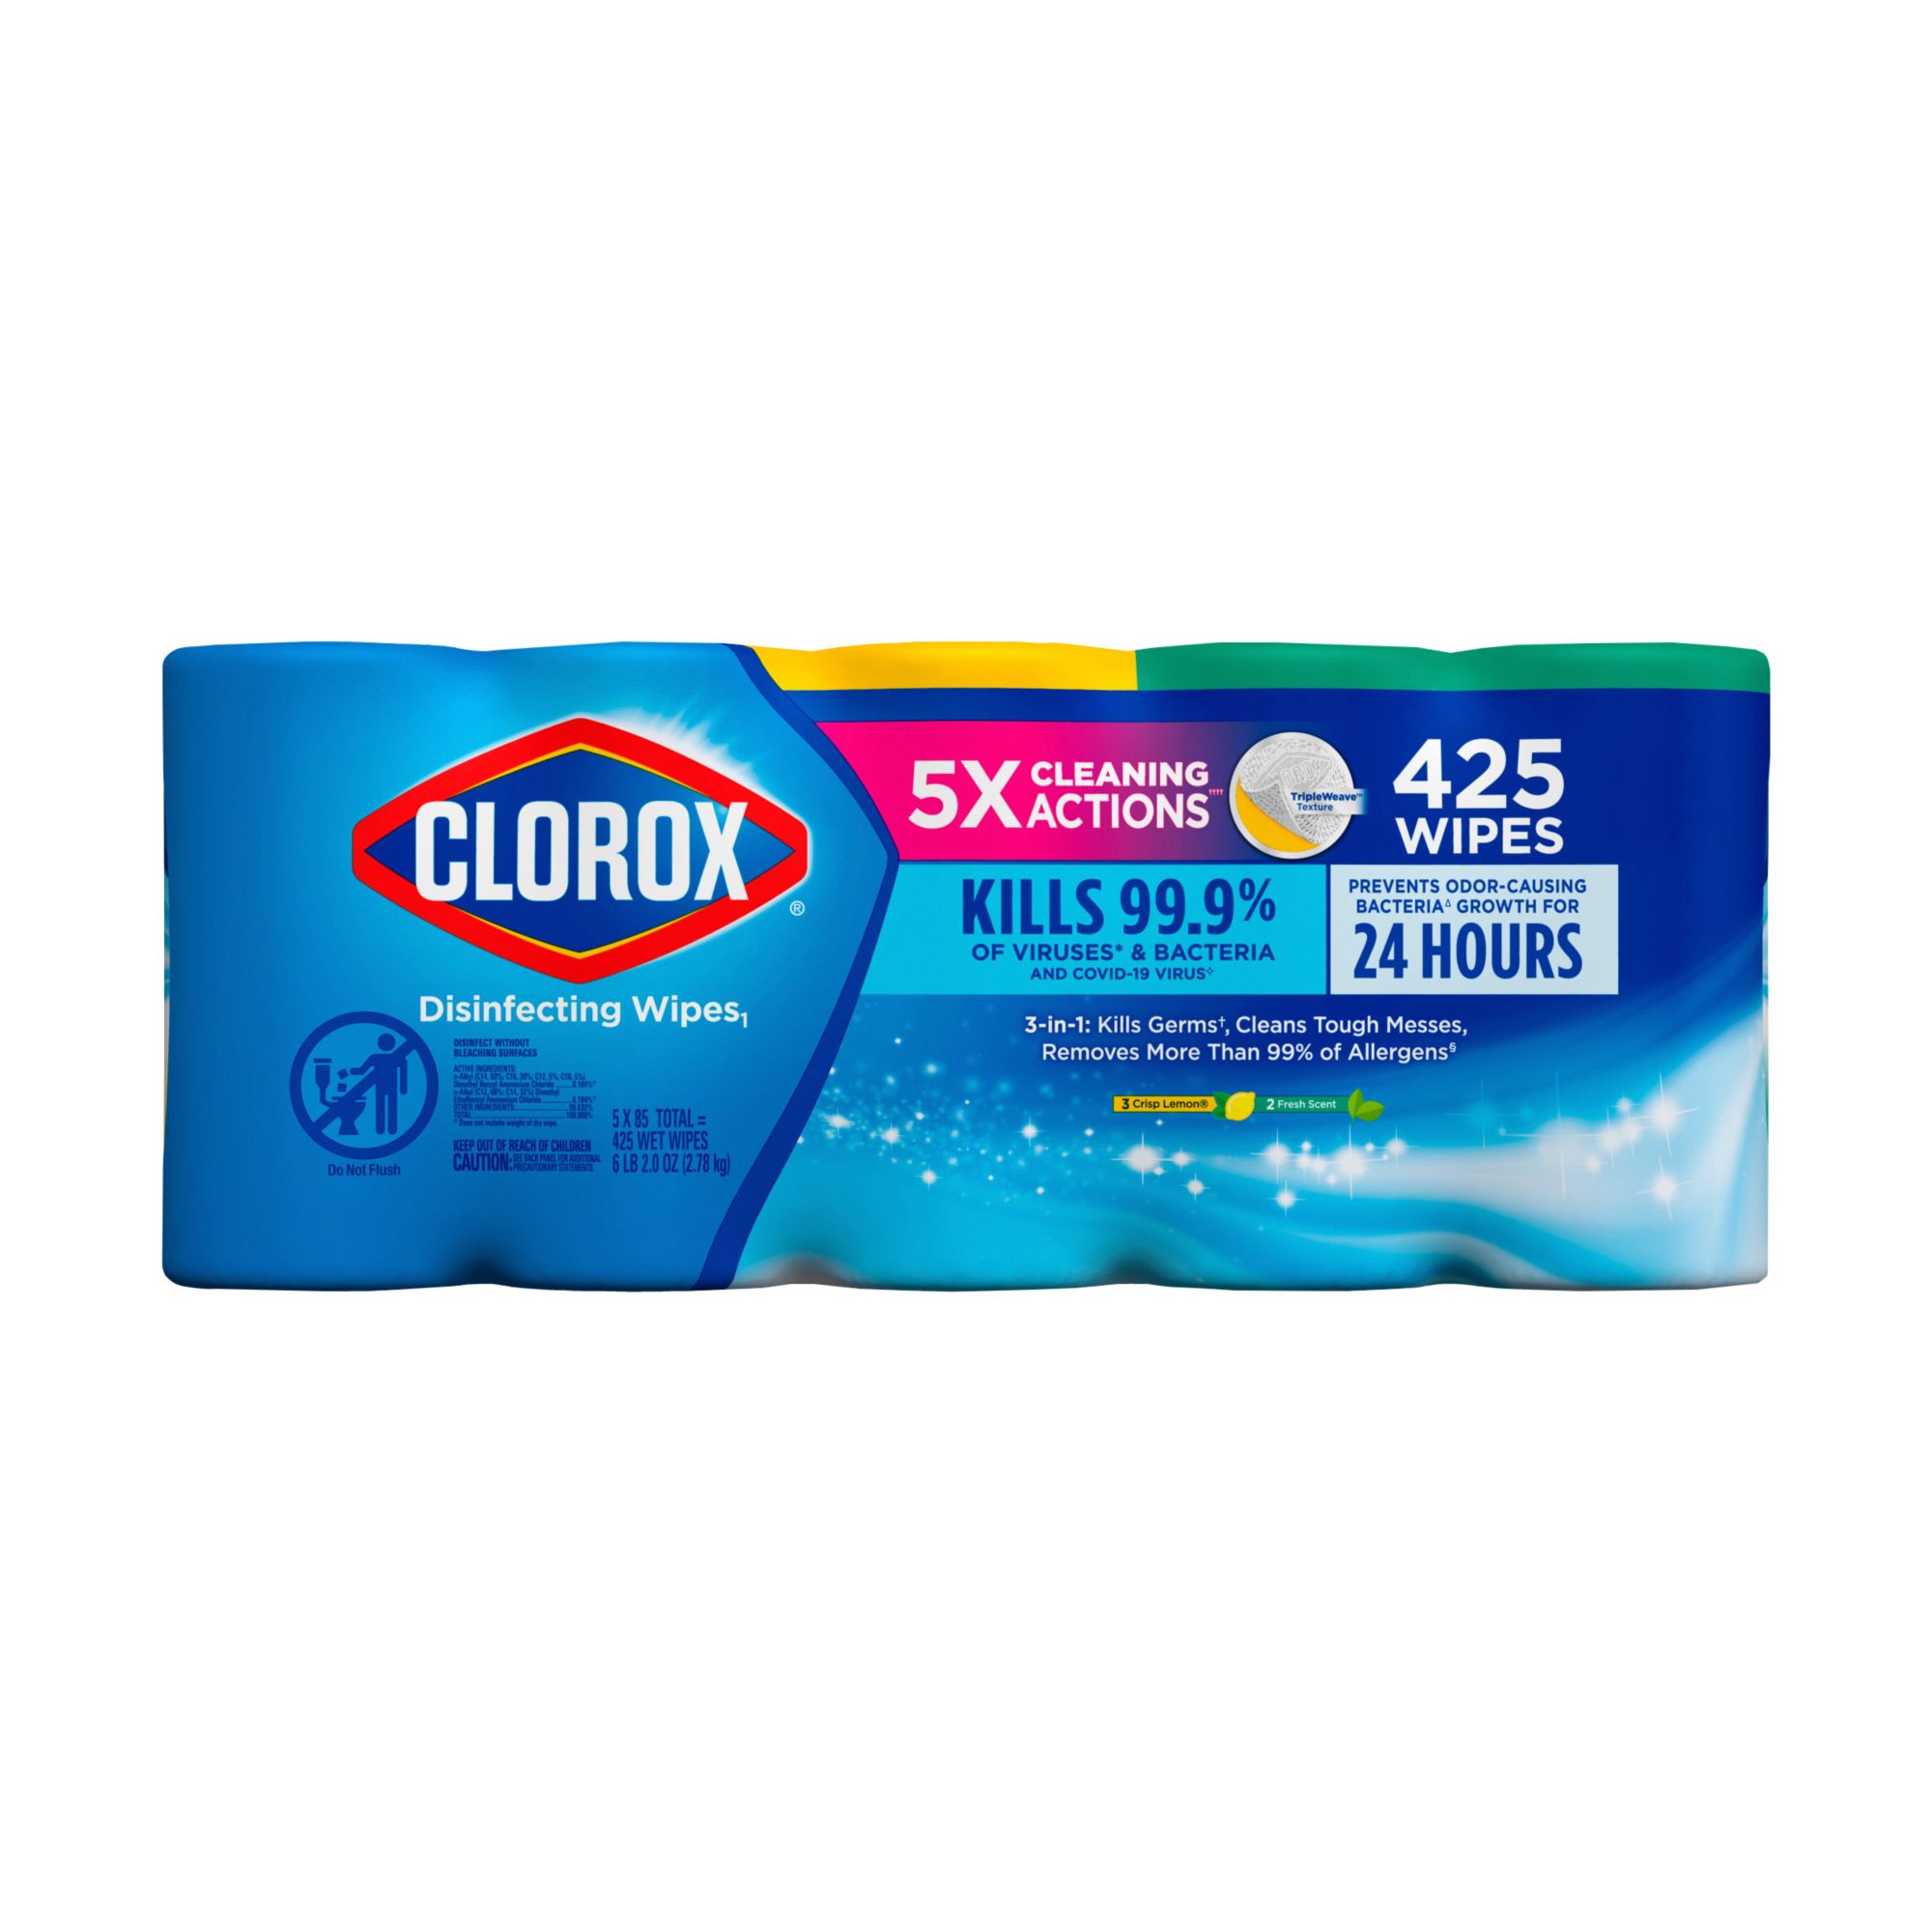 Clorox Disinfecting Wipes Value Pack 5 Pk Bjs Wholesale Club